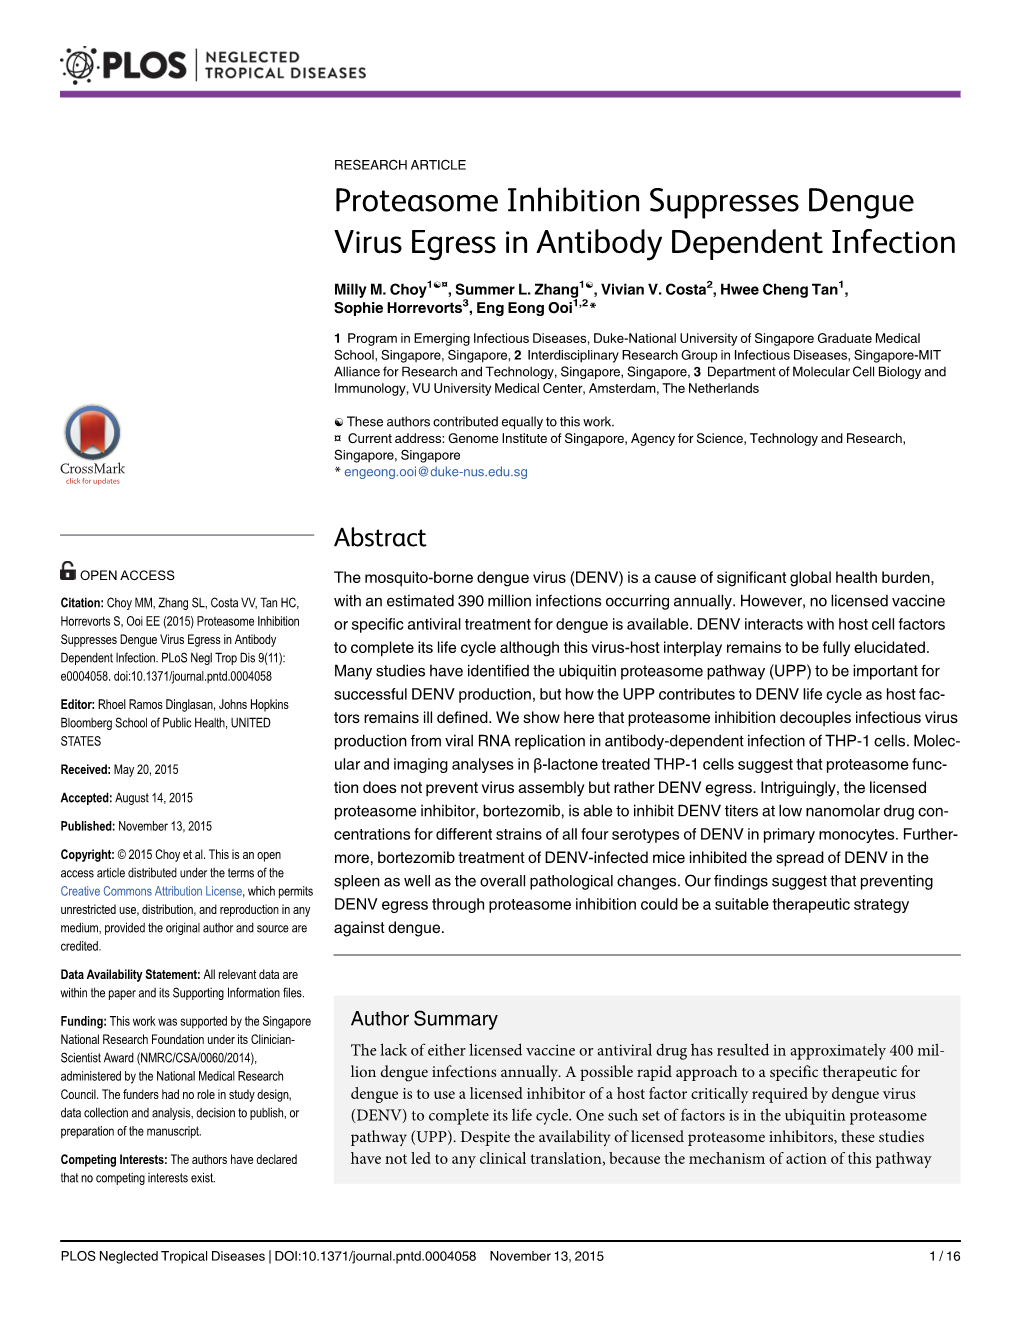 Proteasome Inhibition Suppresses Dengue Virus Egress in Antibody Dependent Infection